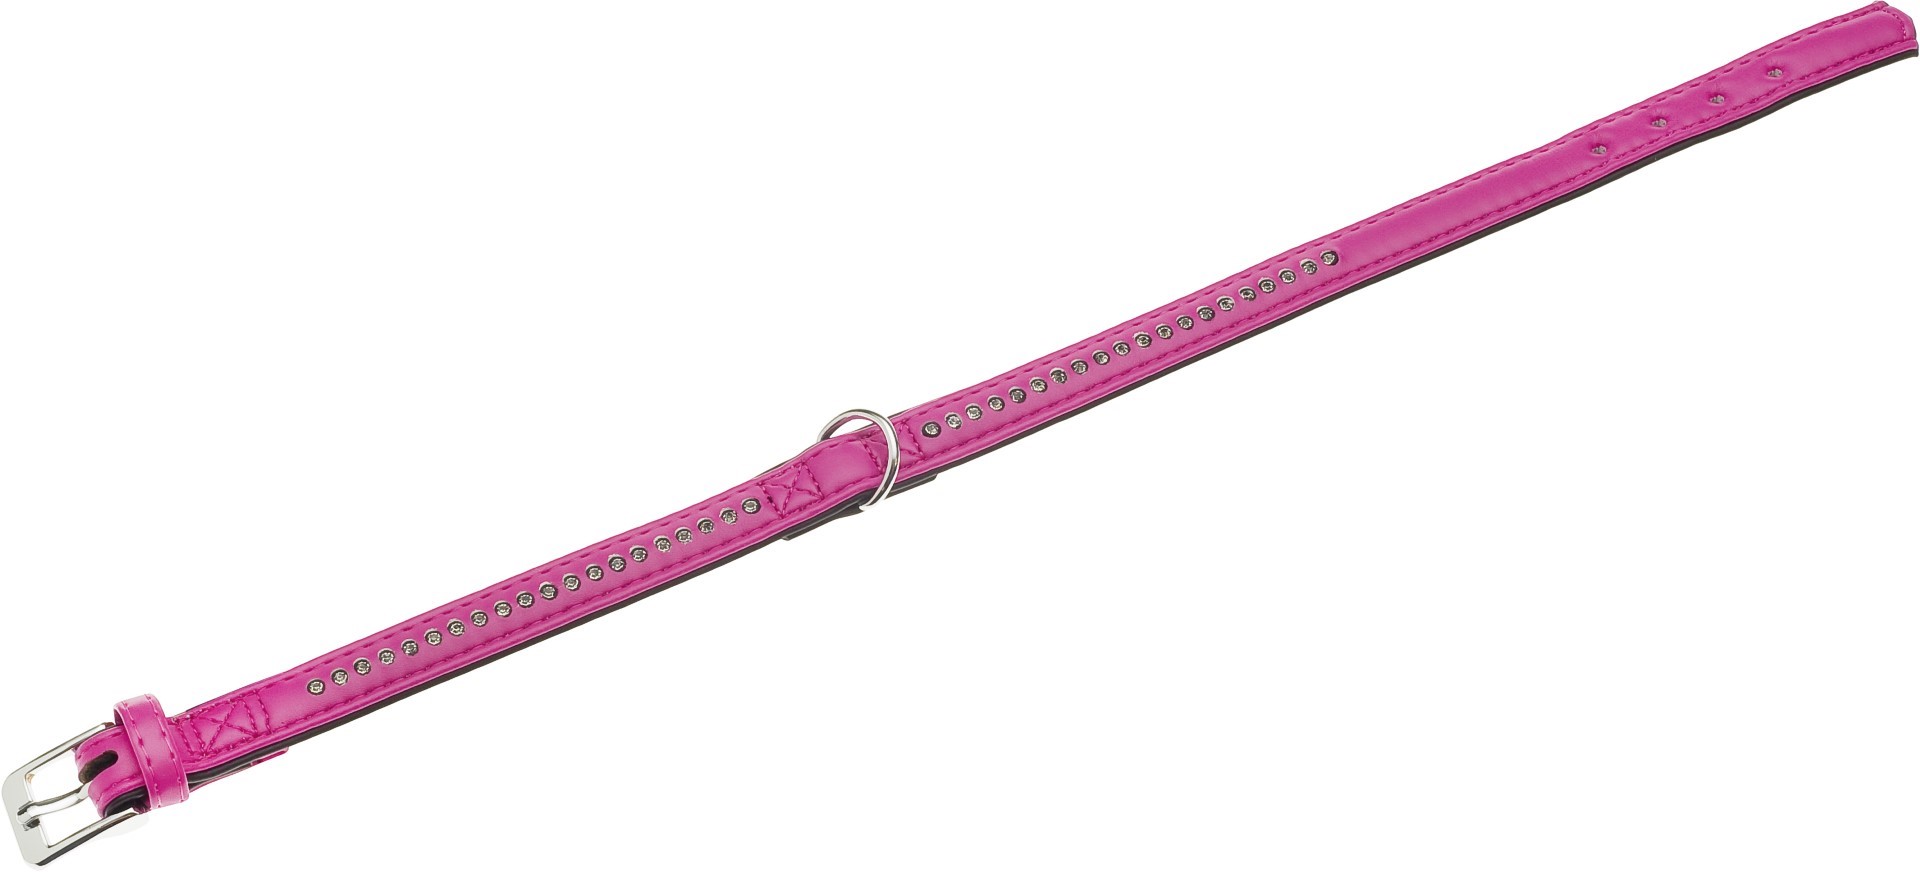 Halsband monte carlo roze s/m 27 cm 14 mm Flamingo